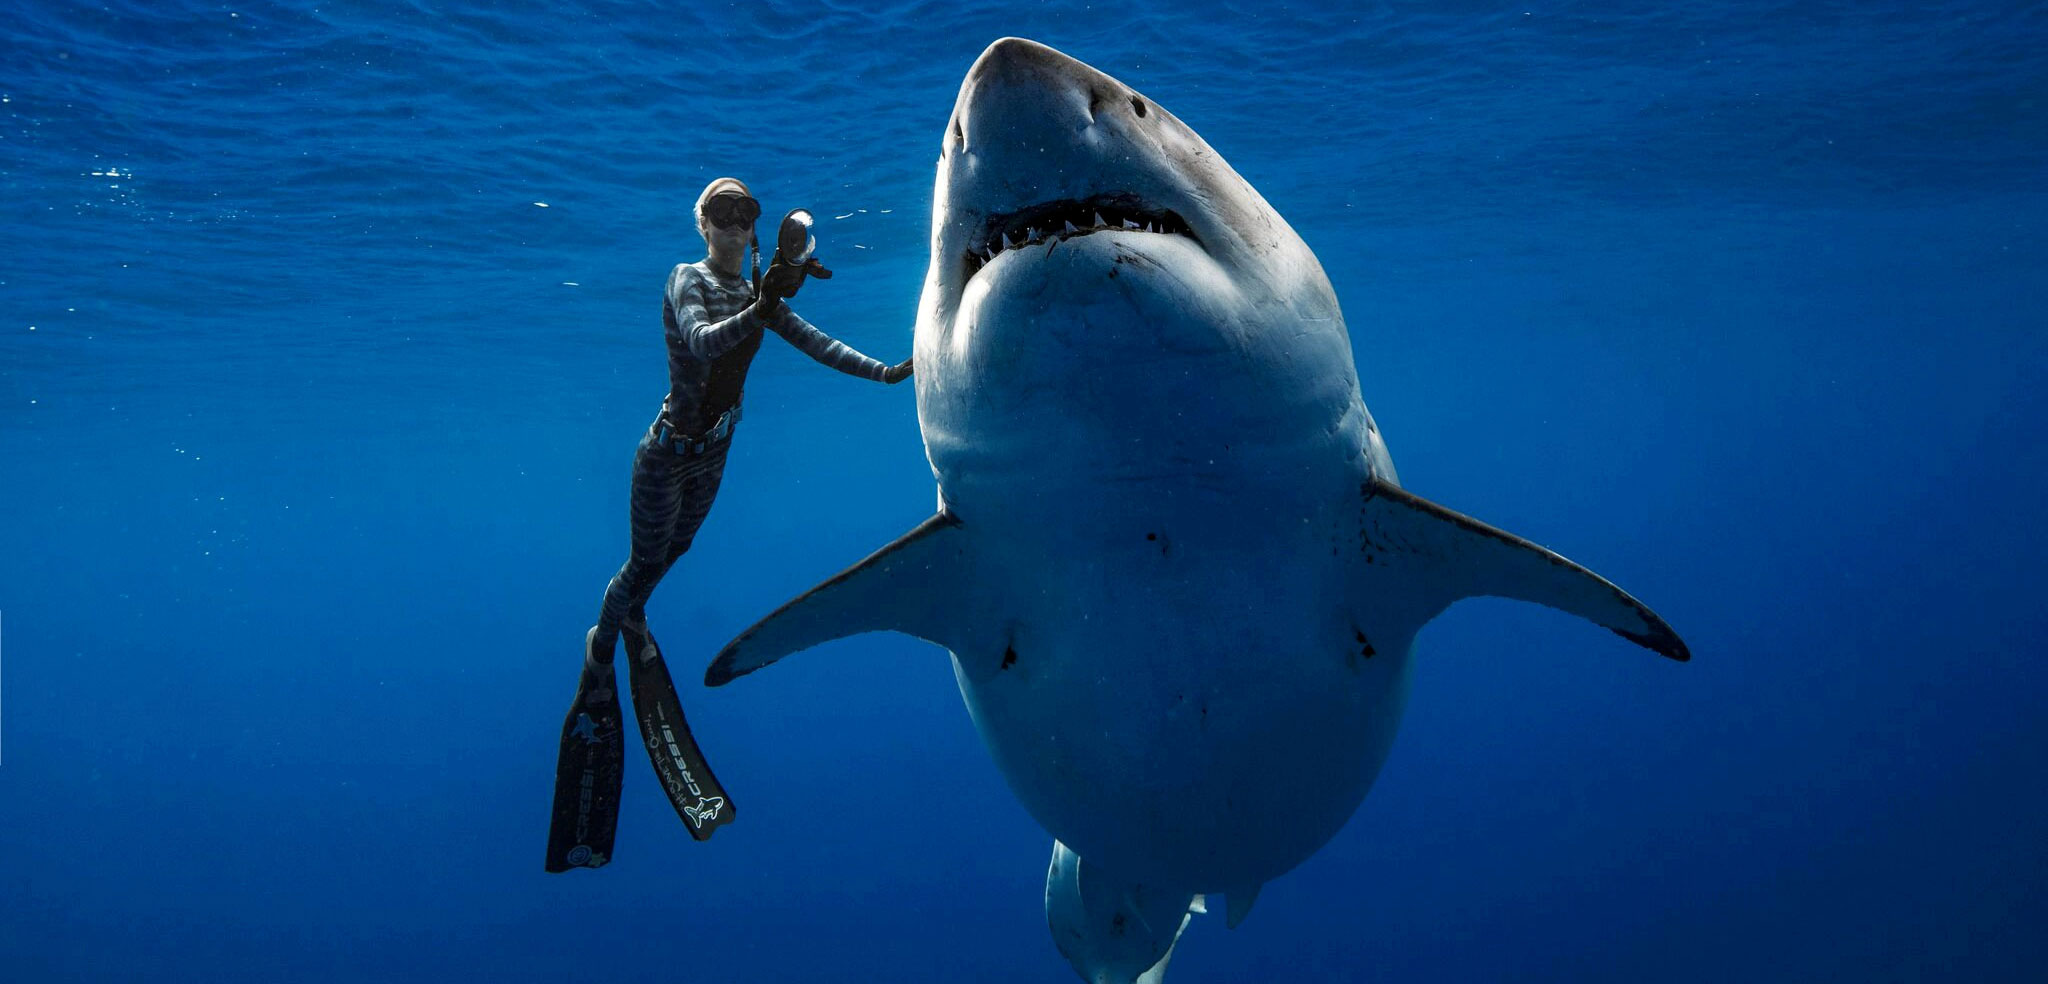 Ocean Ramsey touching a great white shark